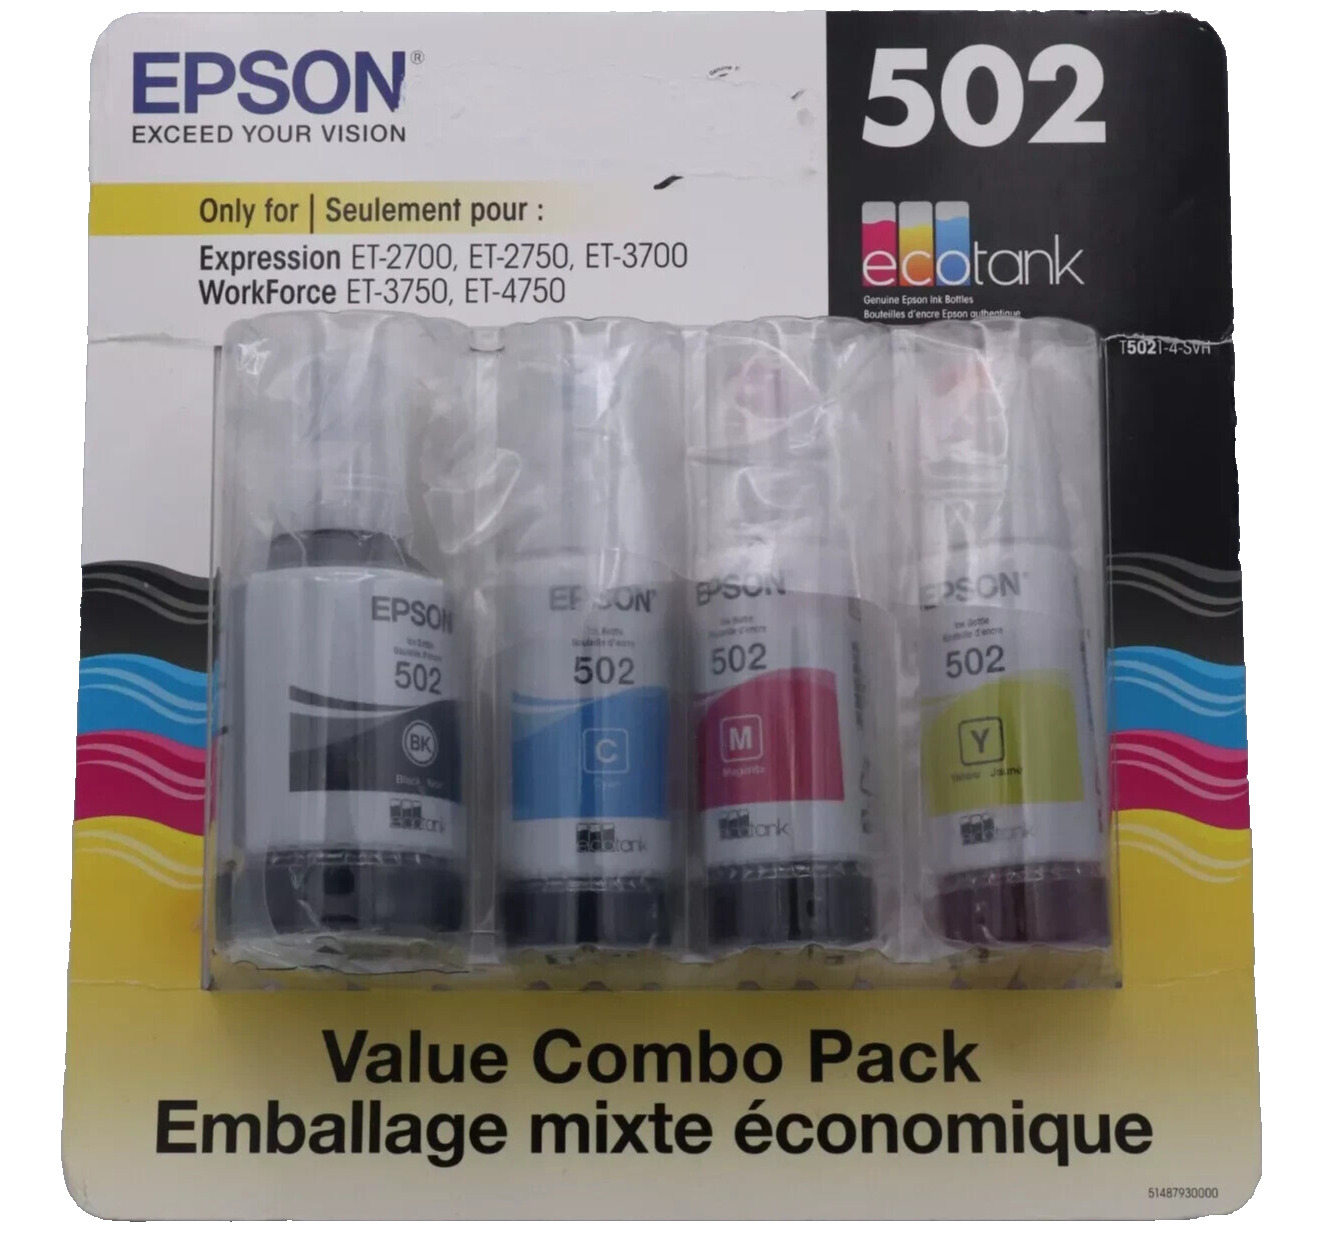 Genuine Epson 502 Ink Value Combo For ECO-TANK ET-2850 Printers-OEM Ink-4PK